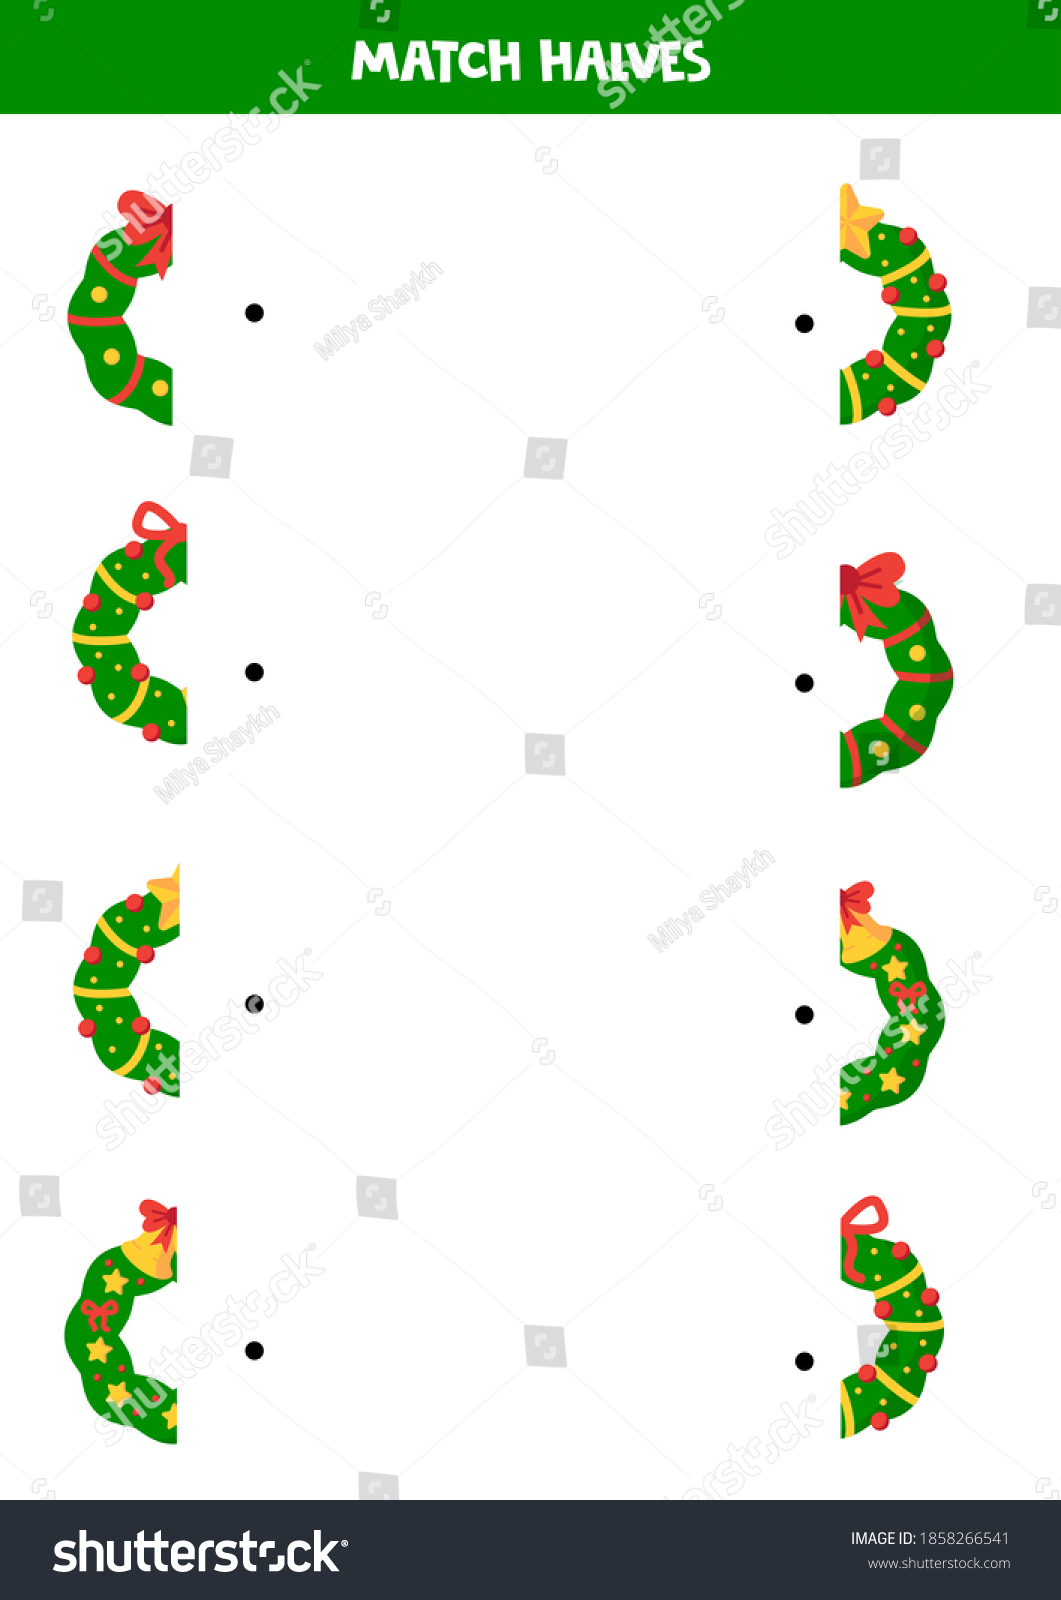 SVG of Match halves of Christmas wreaths. Logical game for children. svg